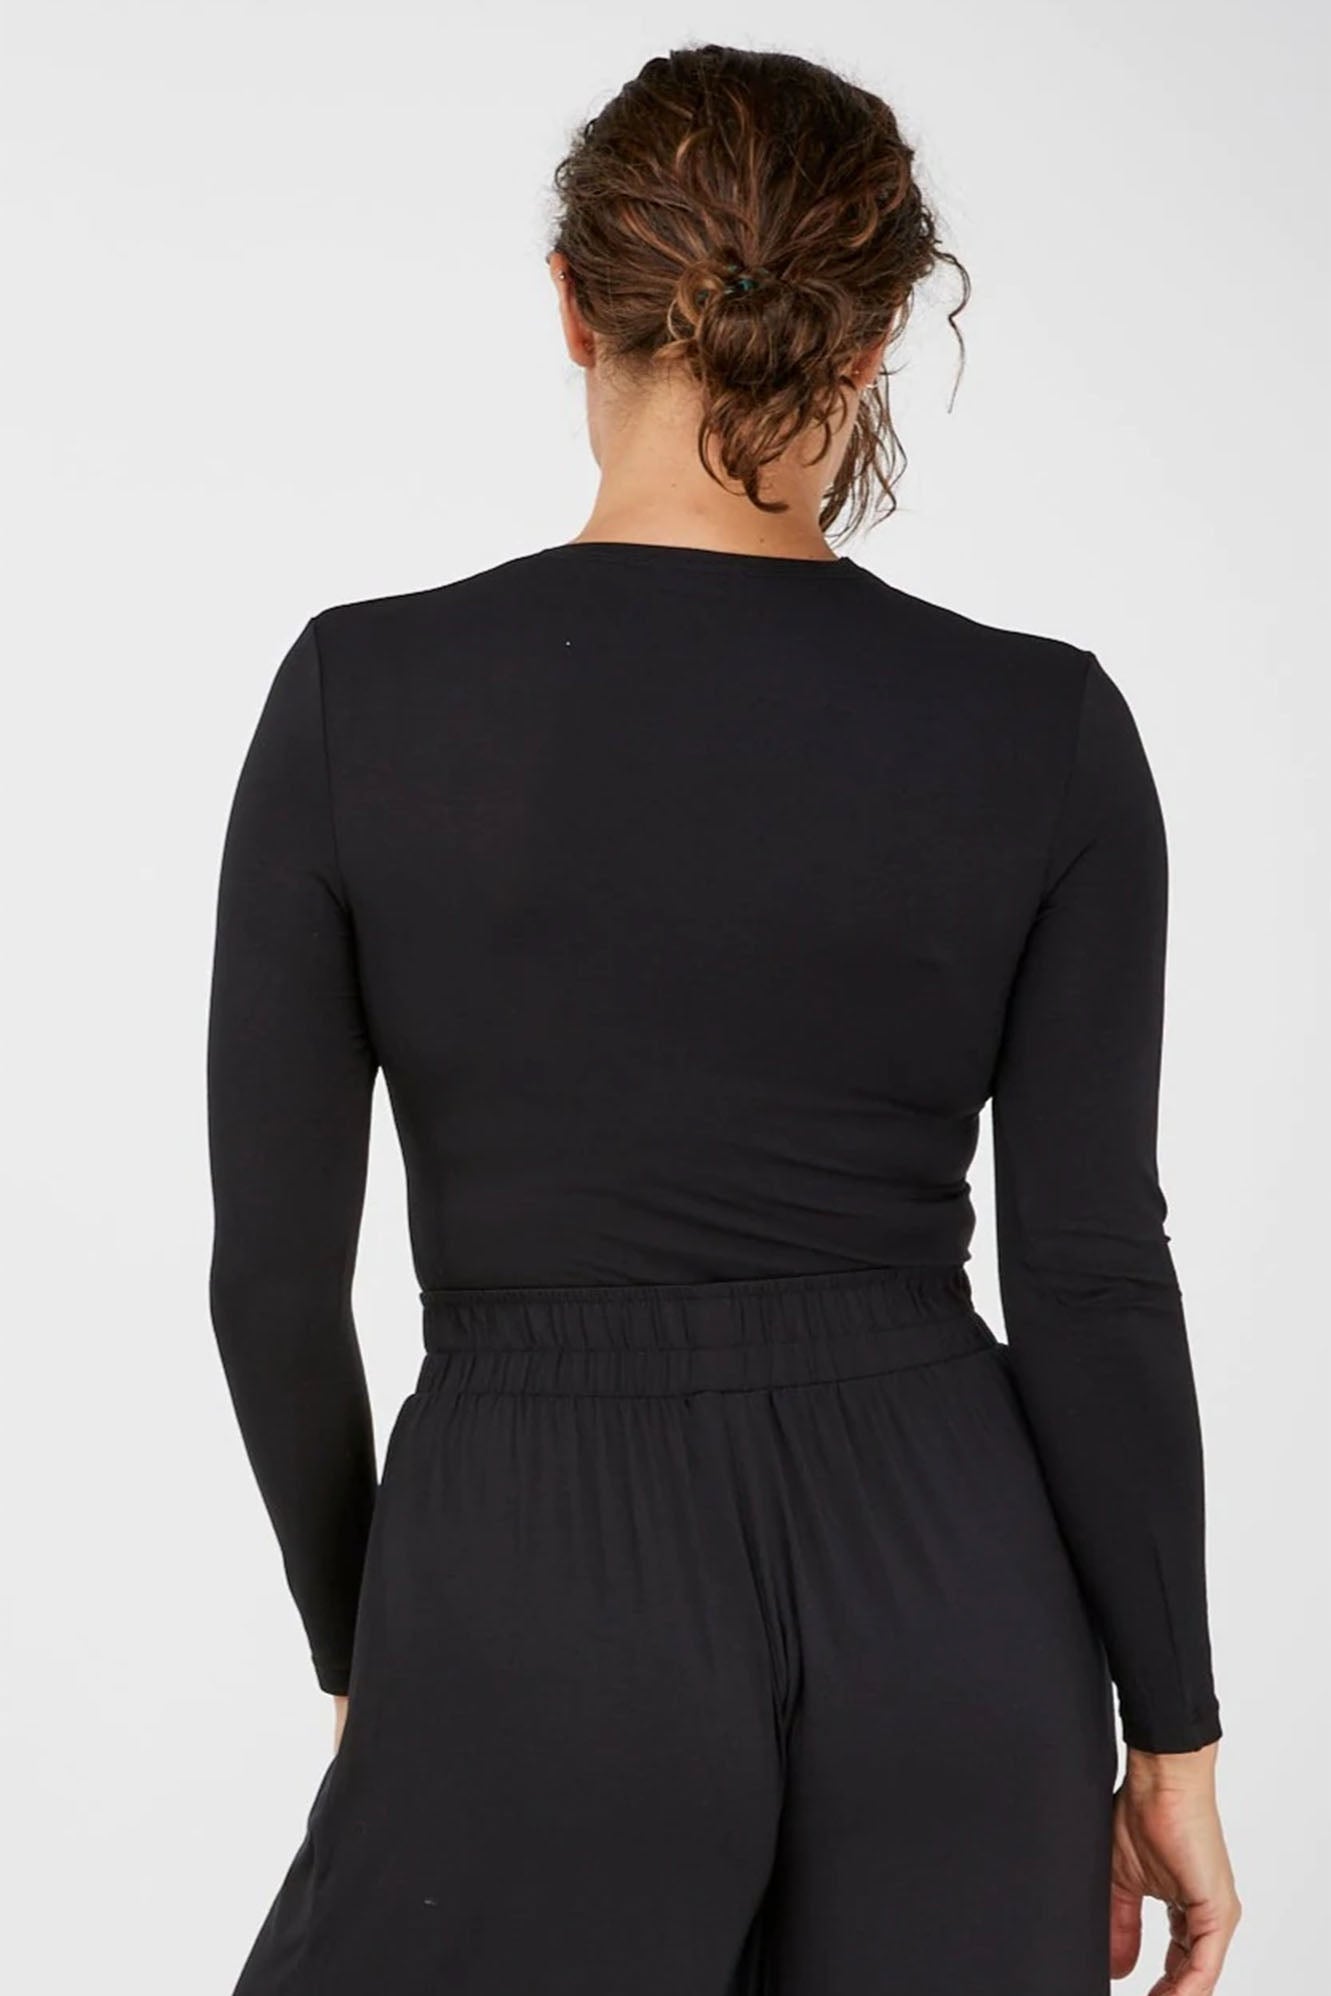 Woman wearing Black Tani Long Sleeve Scoop Neck Tee 79350 back view